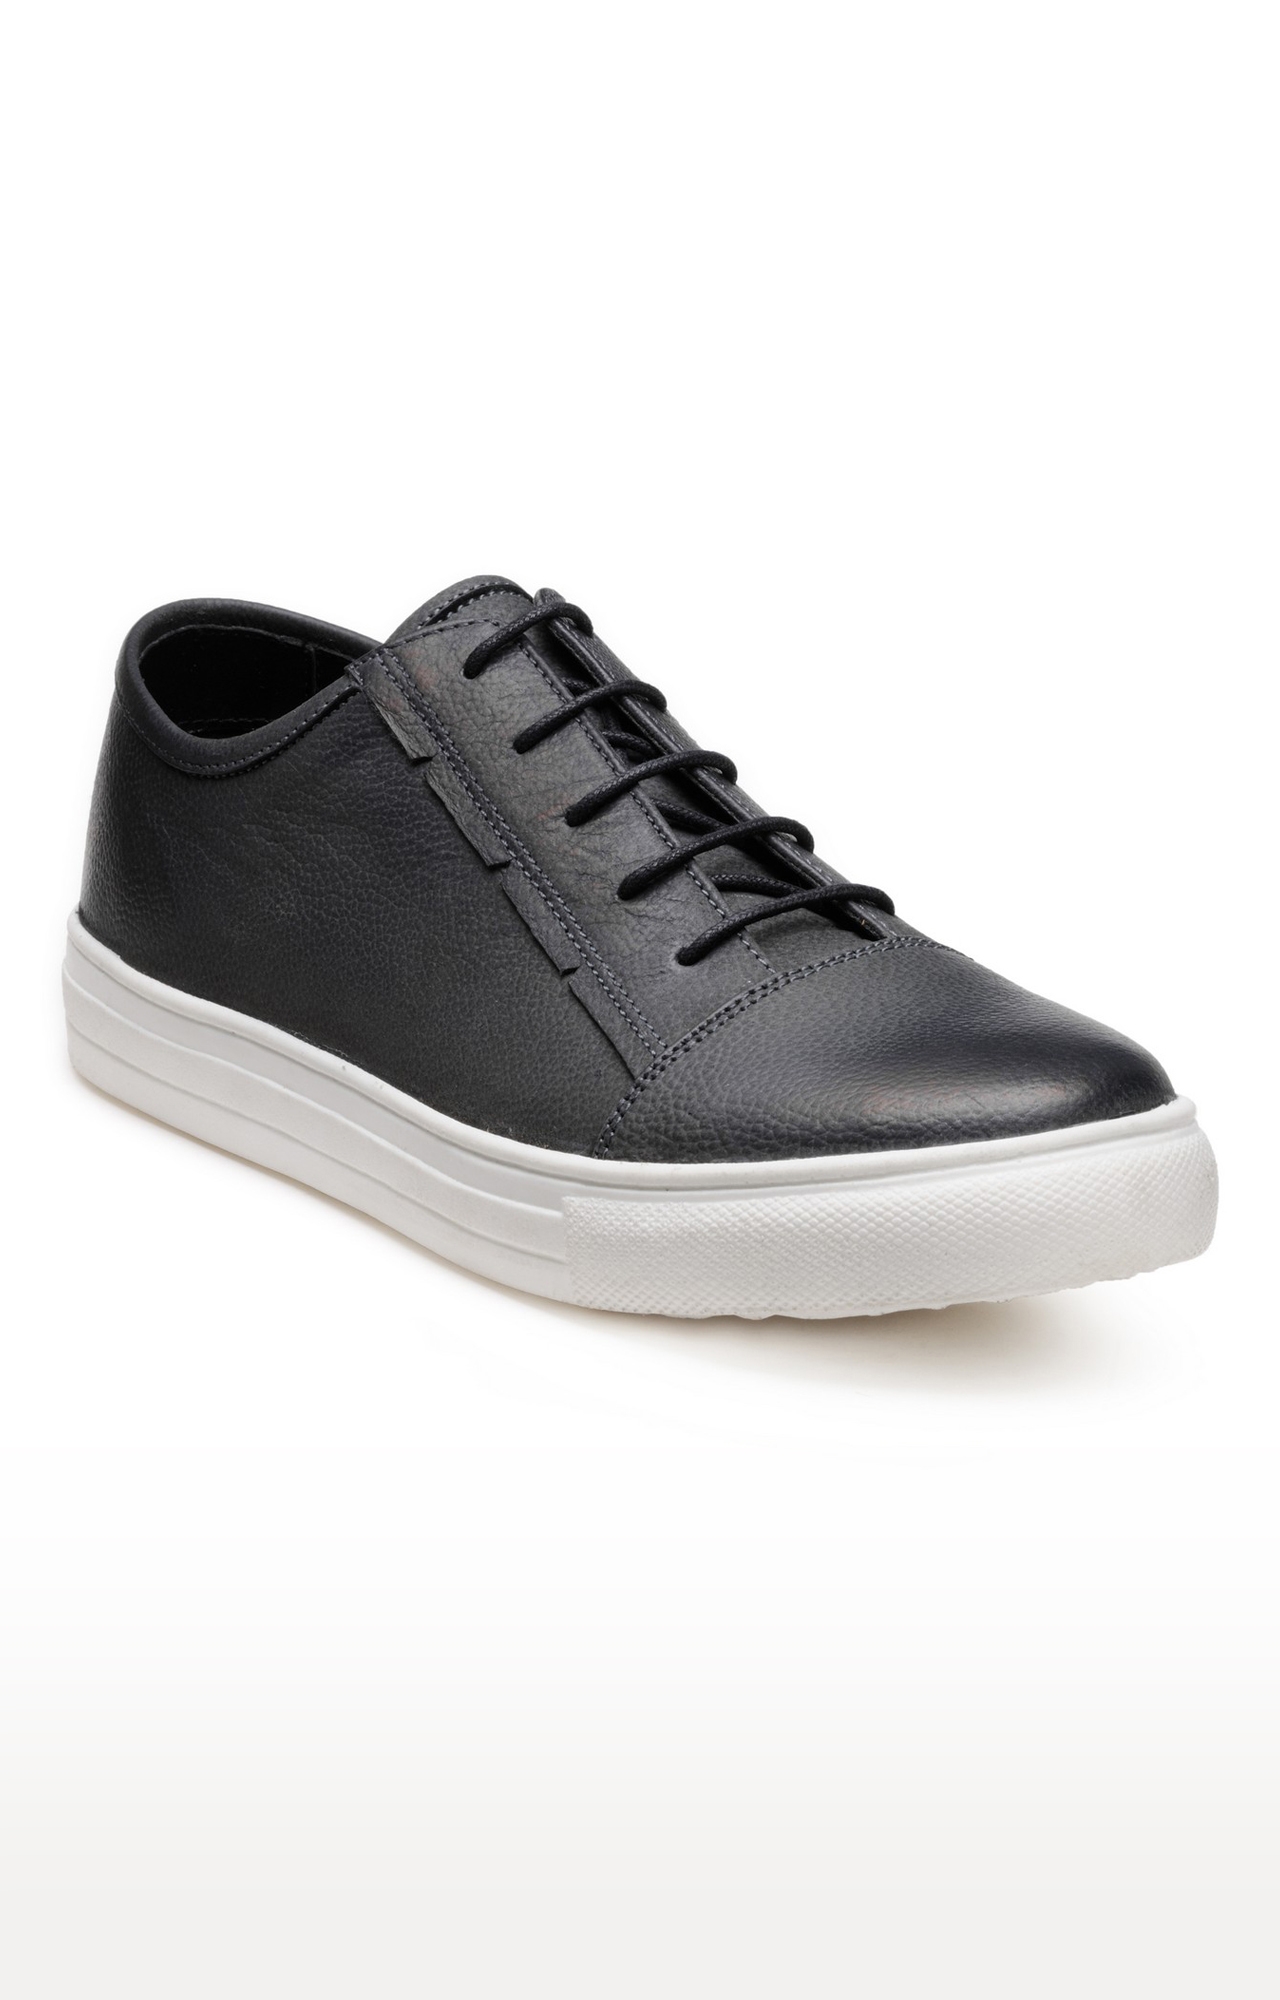 FRANCO LEONE | Franco Leone Charcoal Leather Sneakers 0